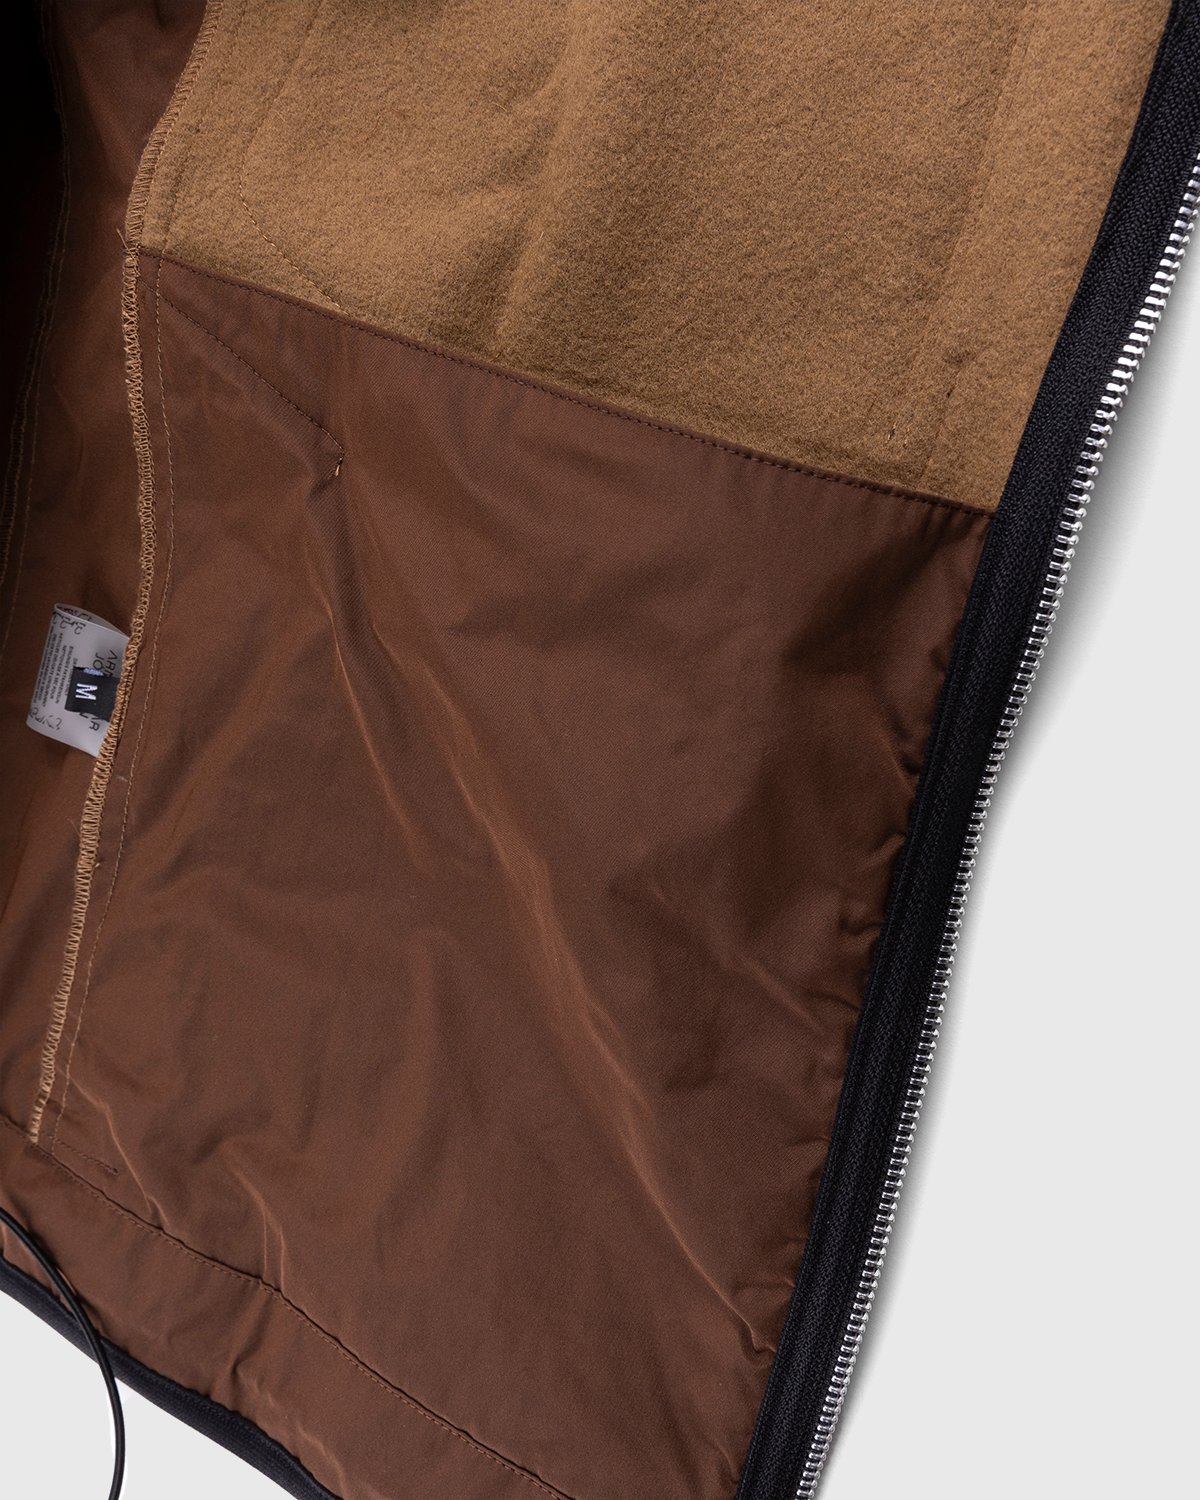 Arnar Mar Jonsson - Patch Pocket Hooded Tracktop Caramel Chocolate - Clothing - Brown - Image 6